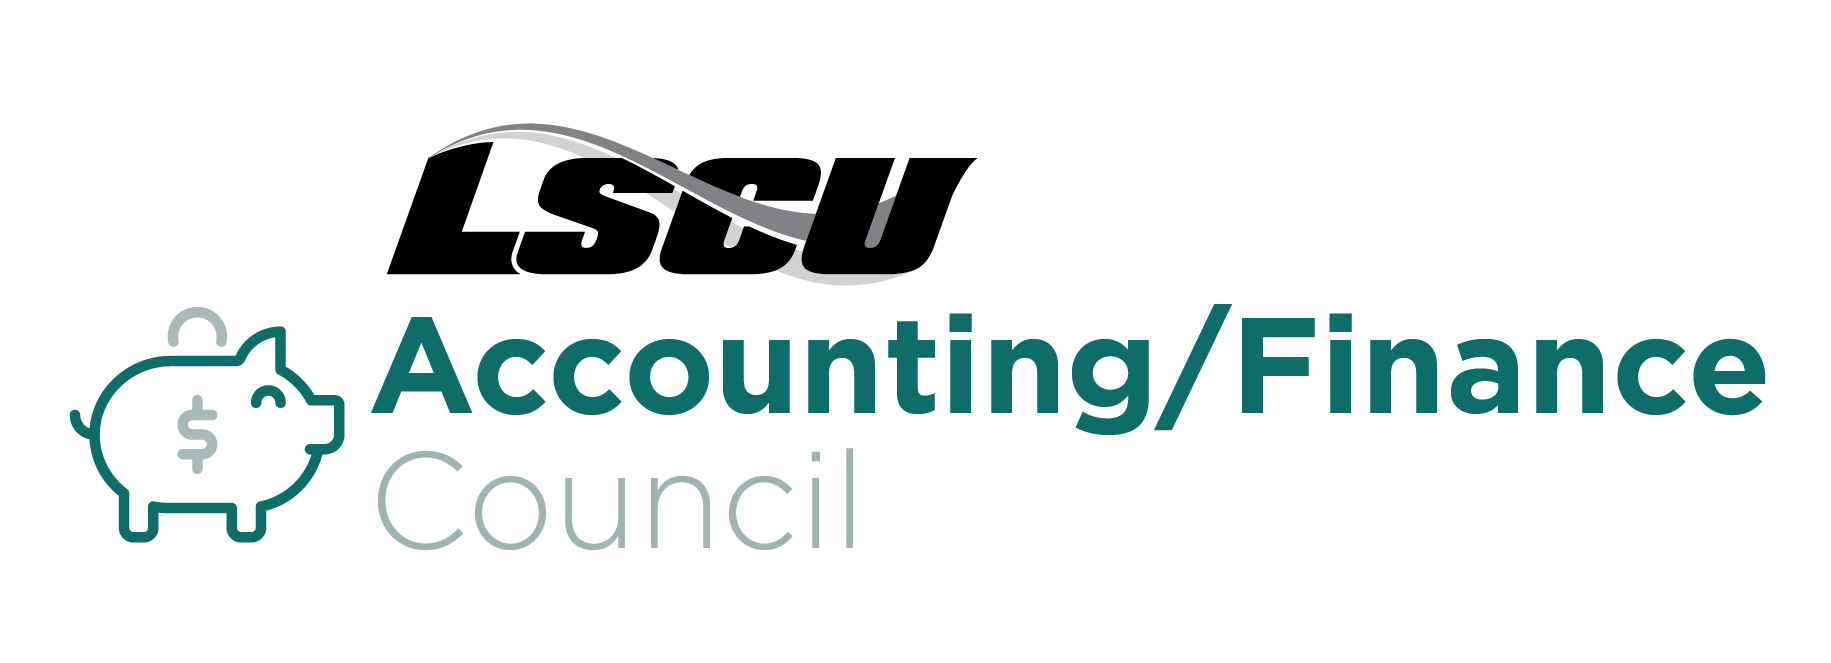 LSCU Accounting/Finance Council